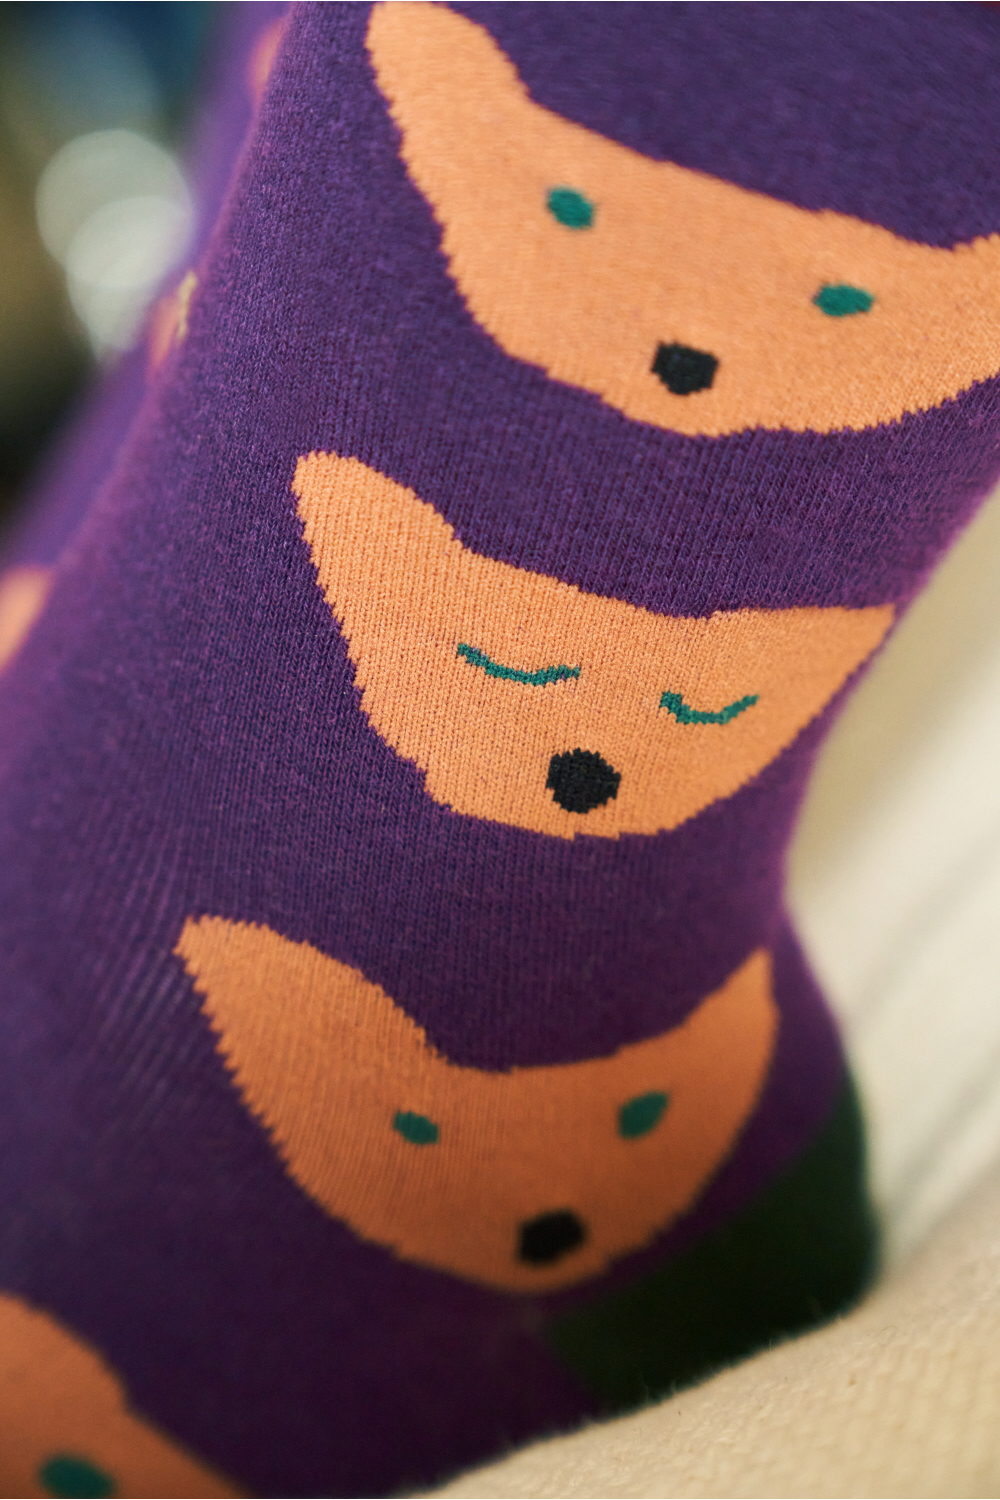 socks detail image-S1L17